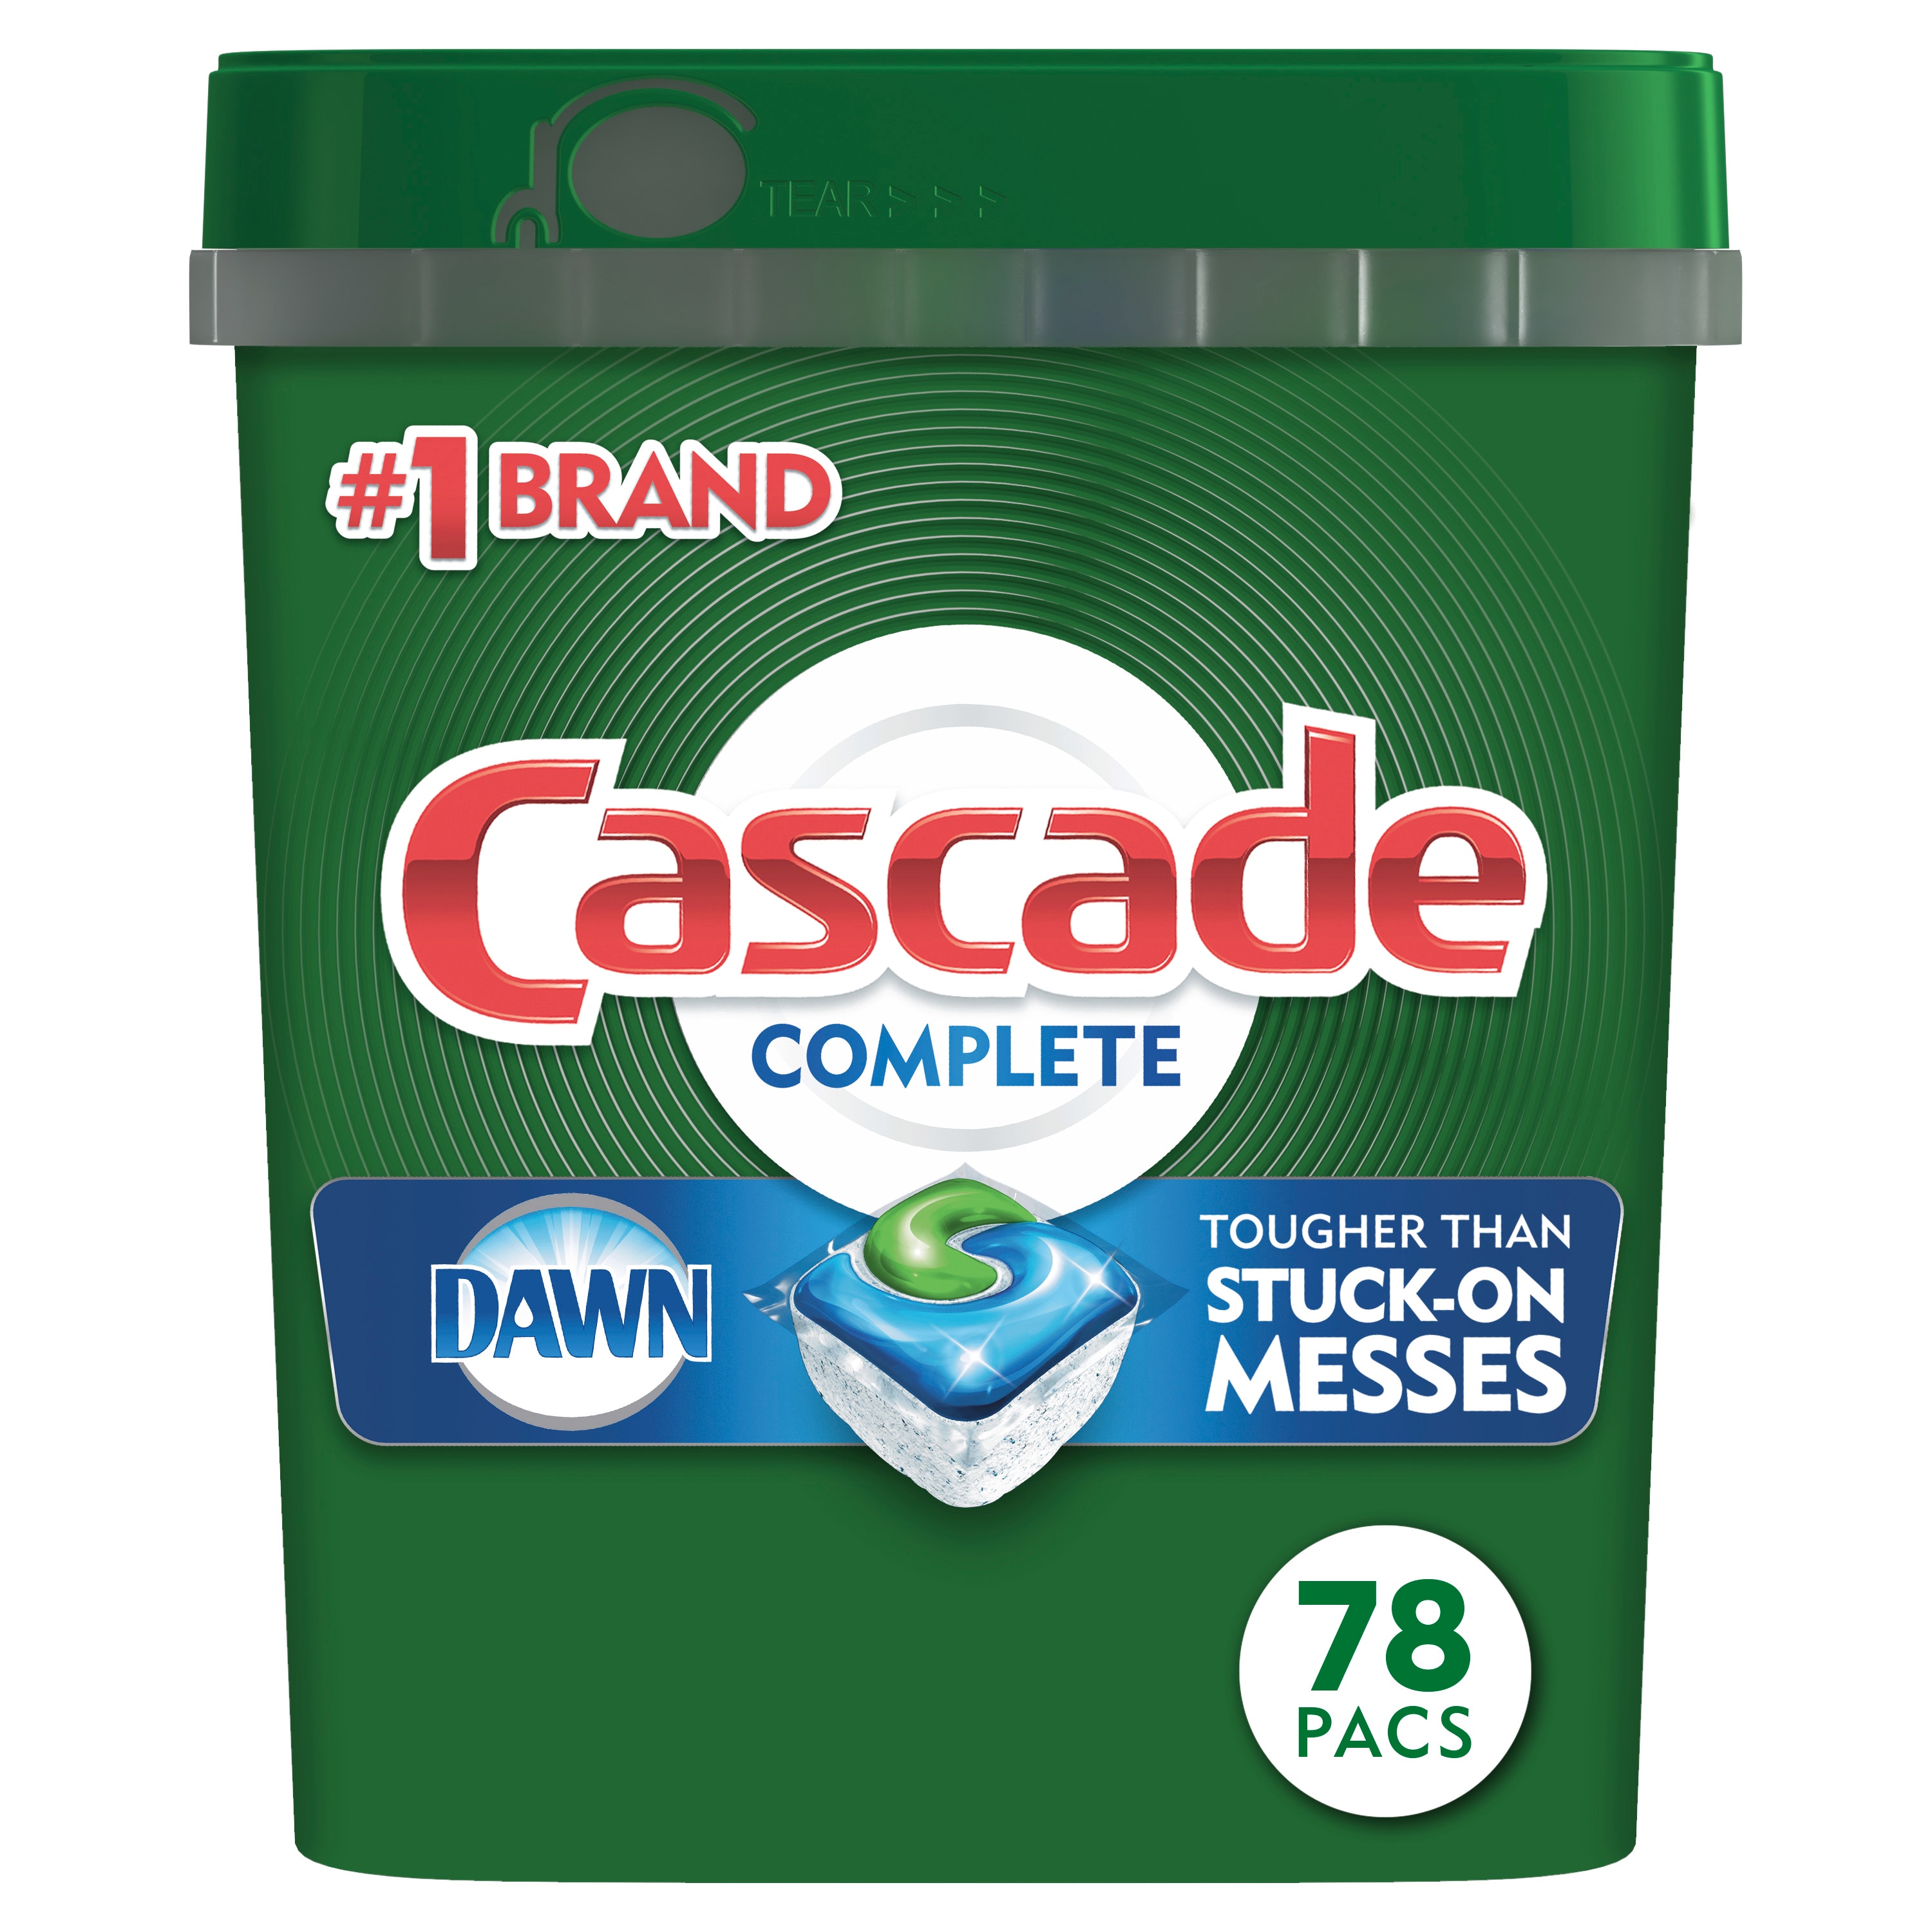 Cascade Dishwasher Detergent, Fresh Scent, Oxi, Search